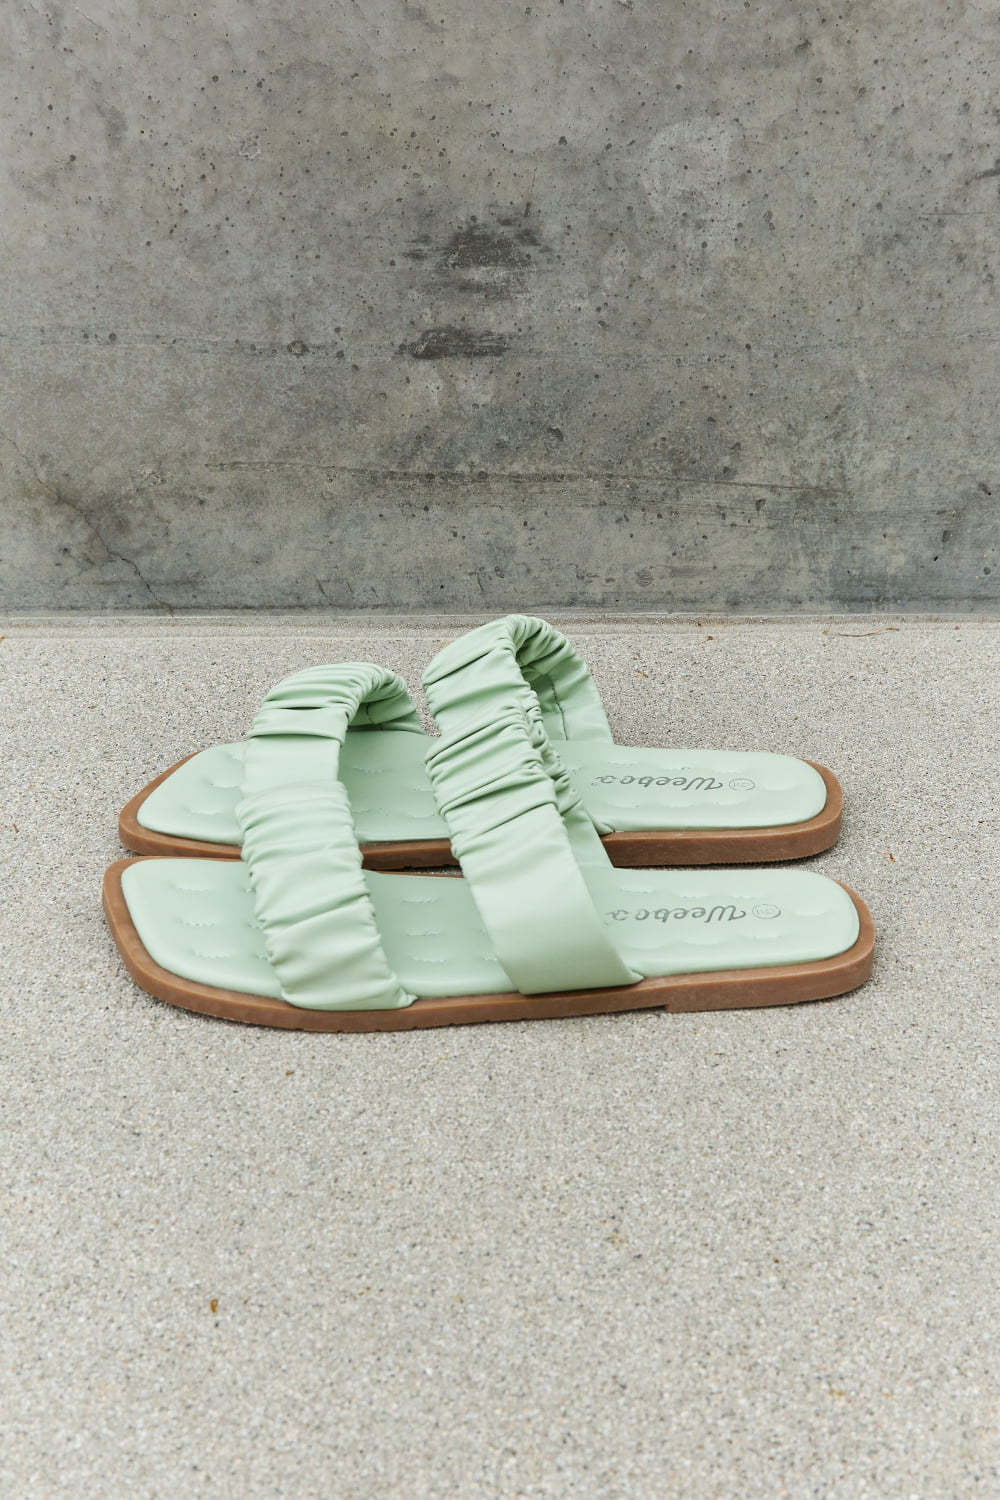 Weeboo Double Strap Scrunch Sandal in Gum Leaf - Guy Christopher 